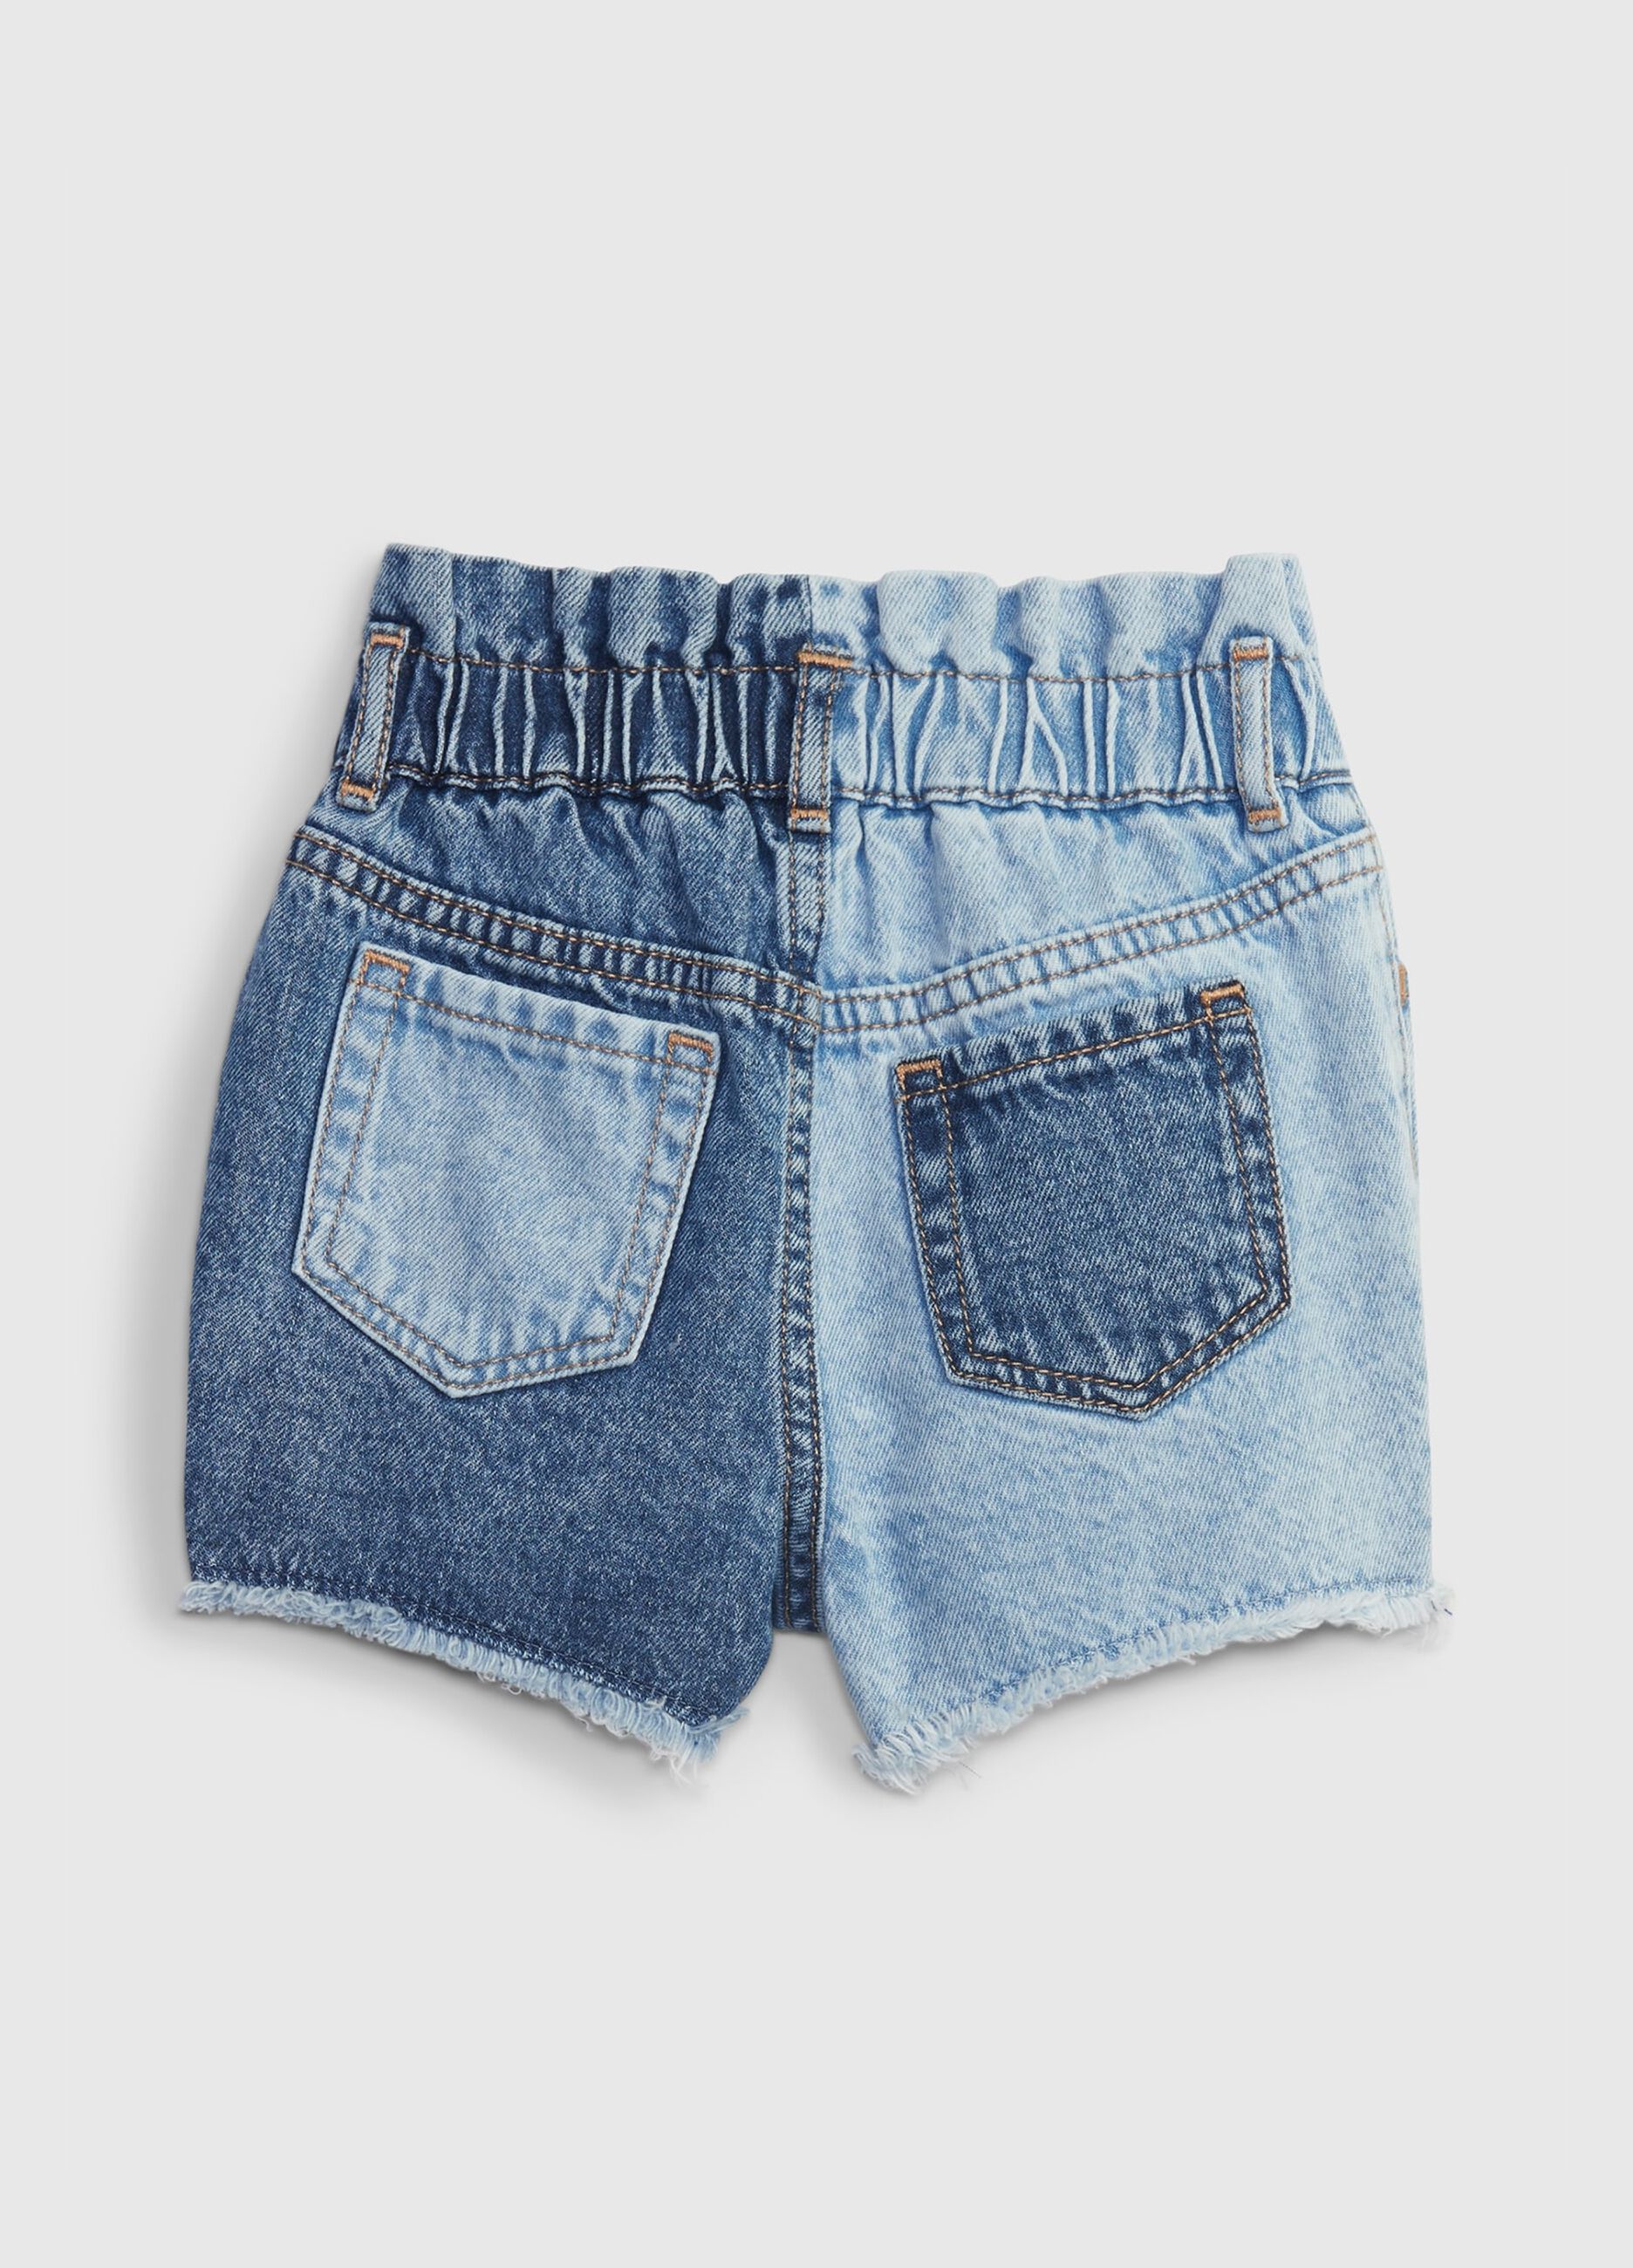 Mum-fit shorts in two-tone denim._1